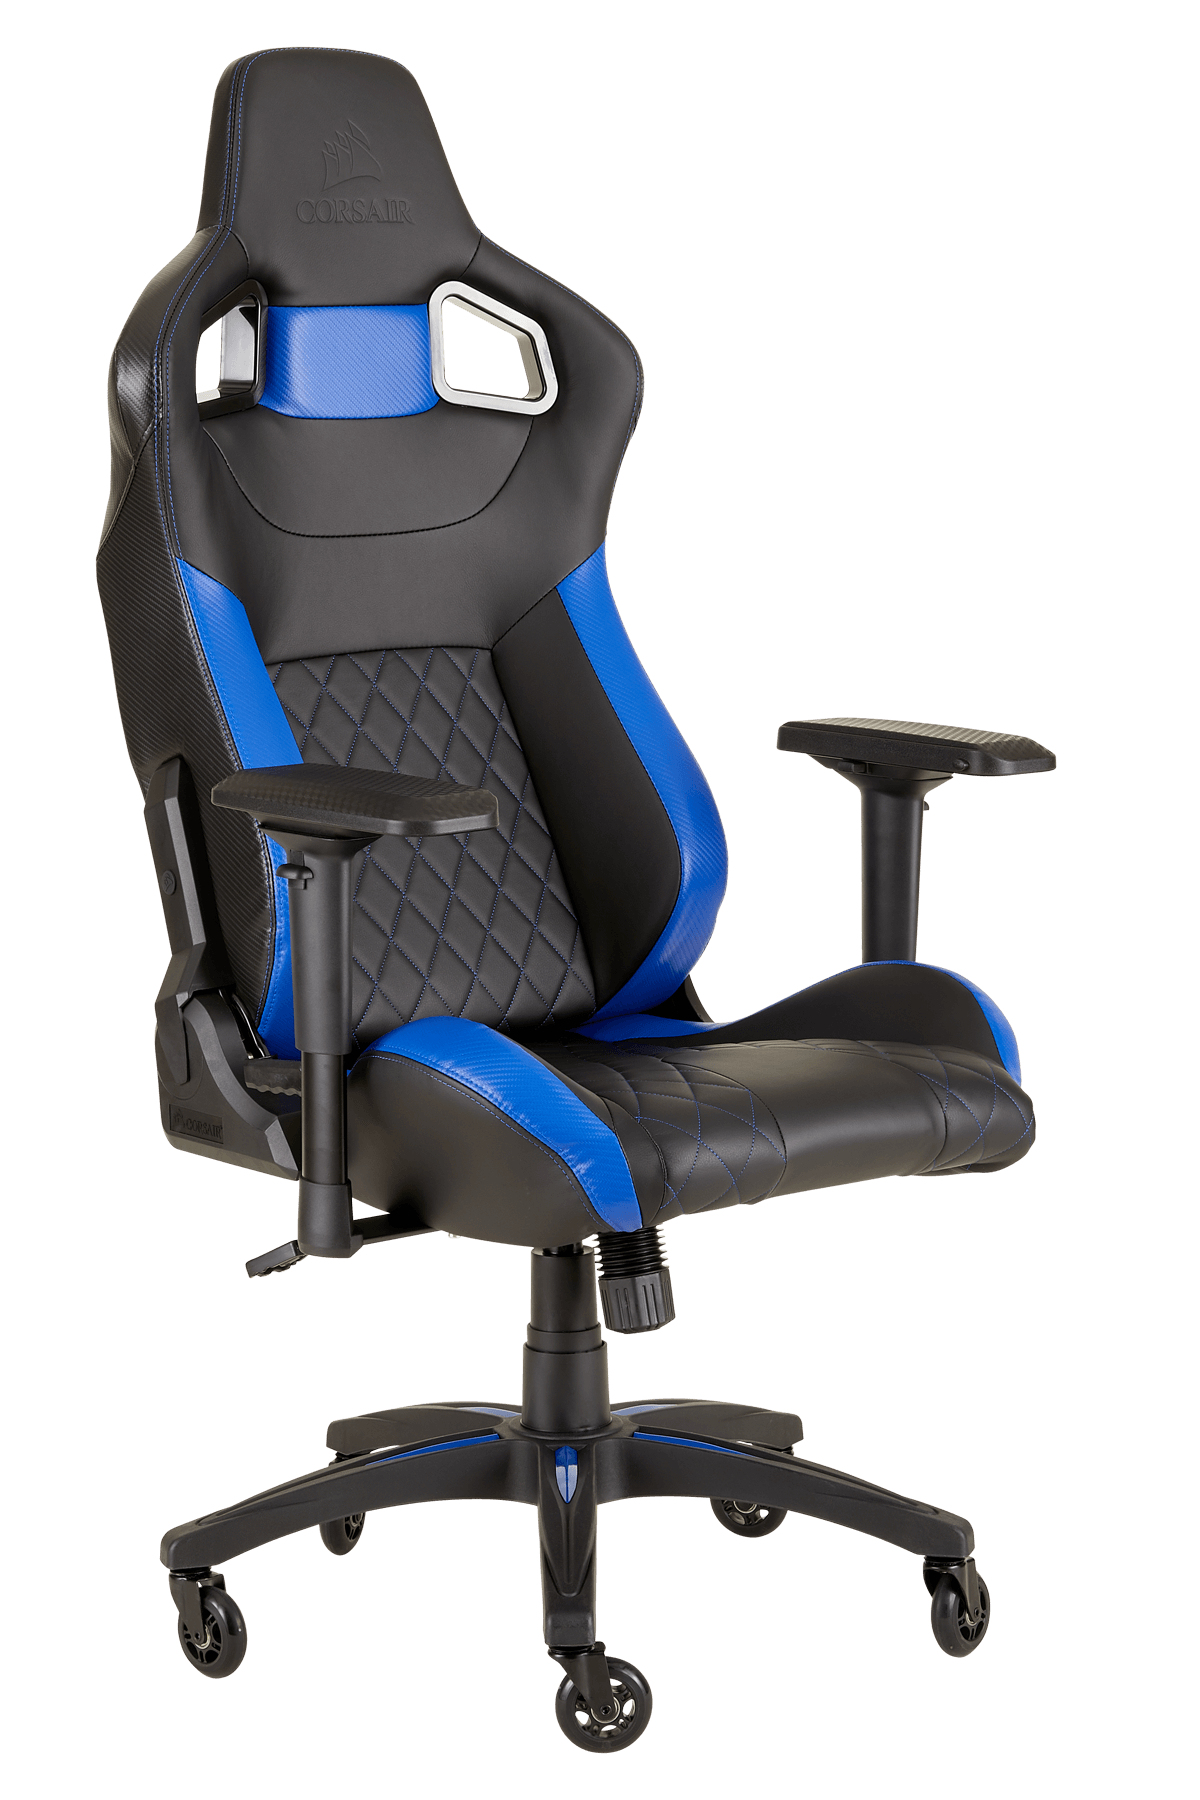 Silla Corsair Gaming T1 Race Reclinable 4D Black/Blue Cf-9010014-Ww